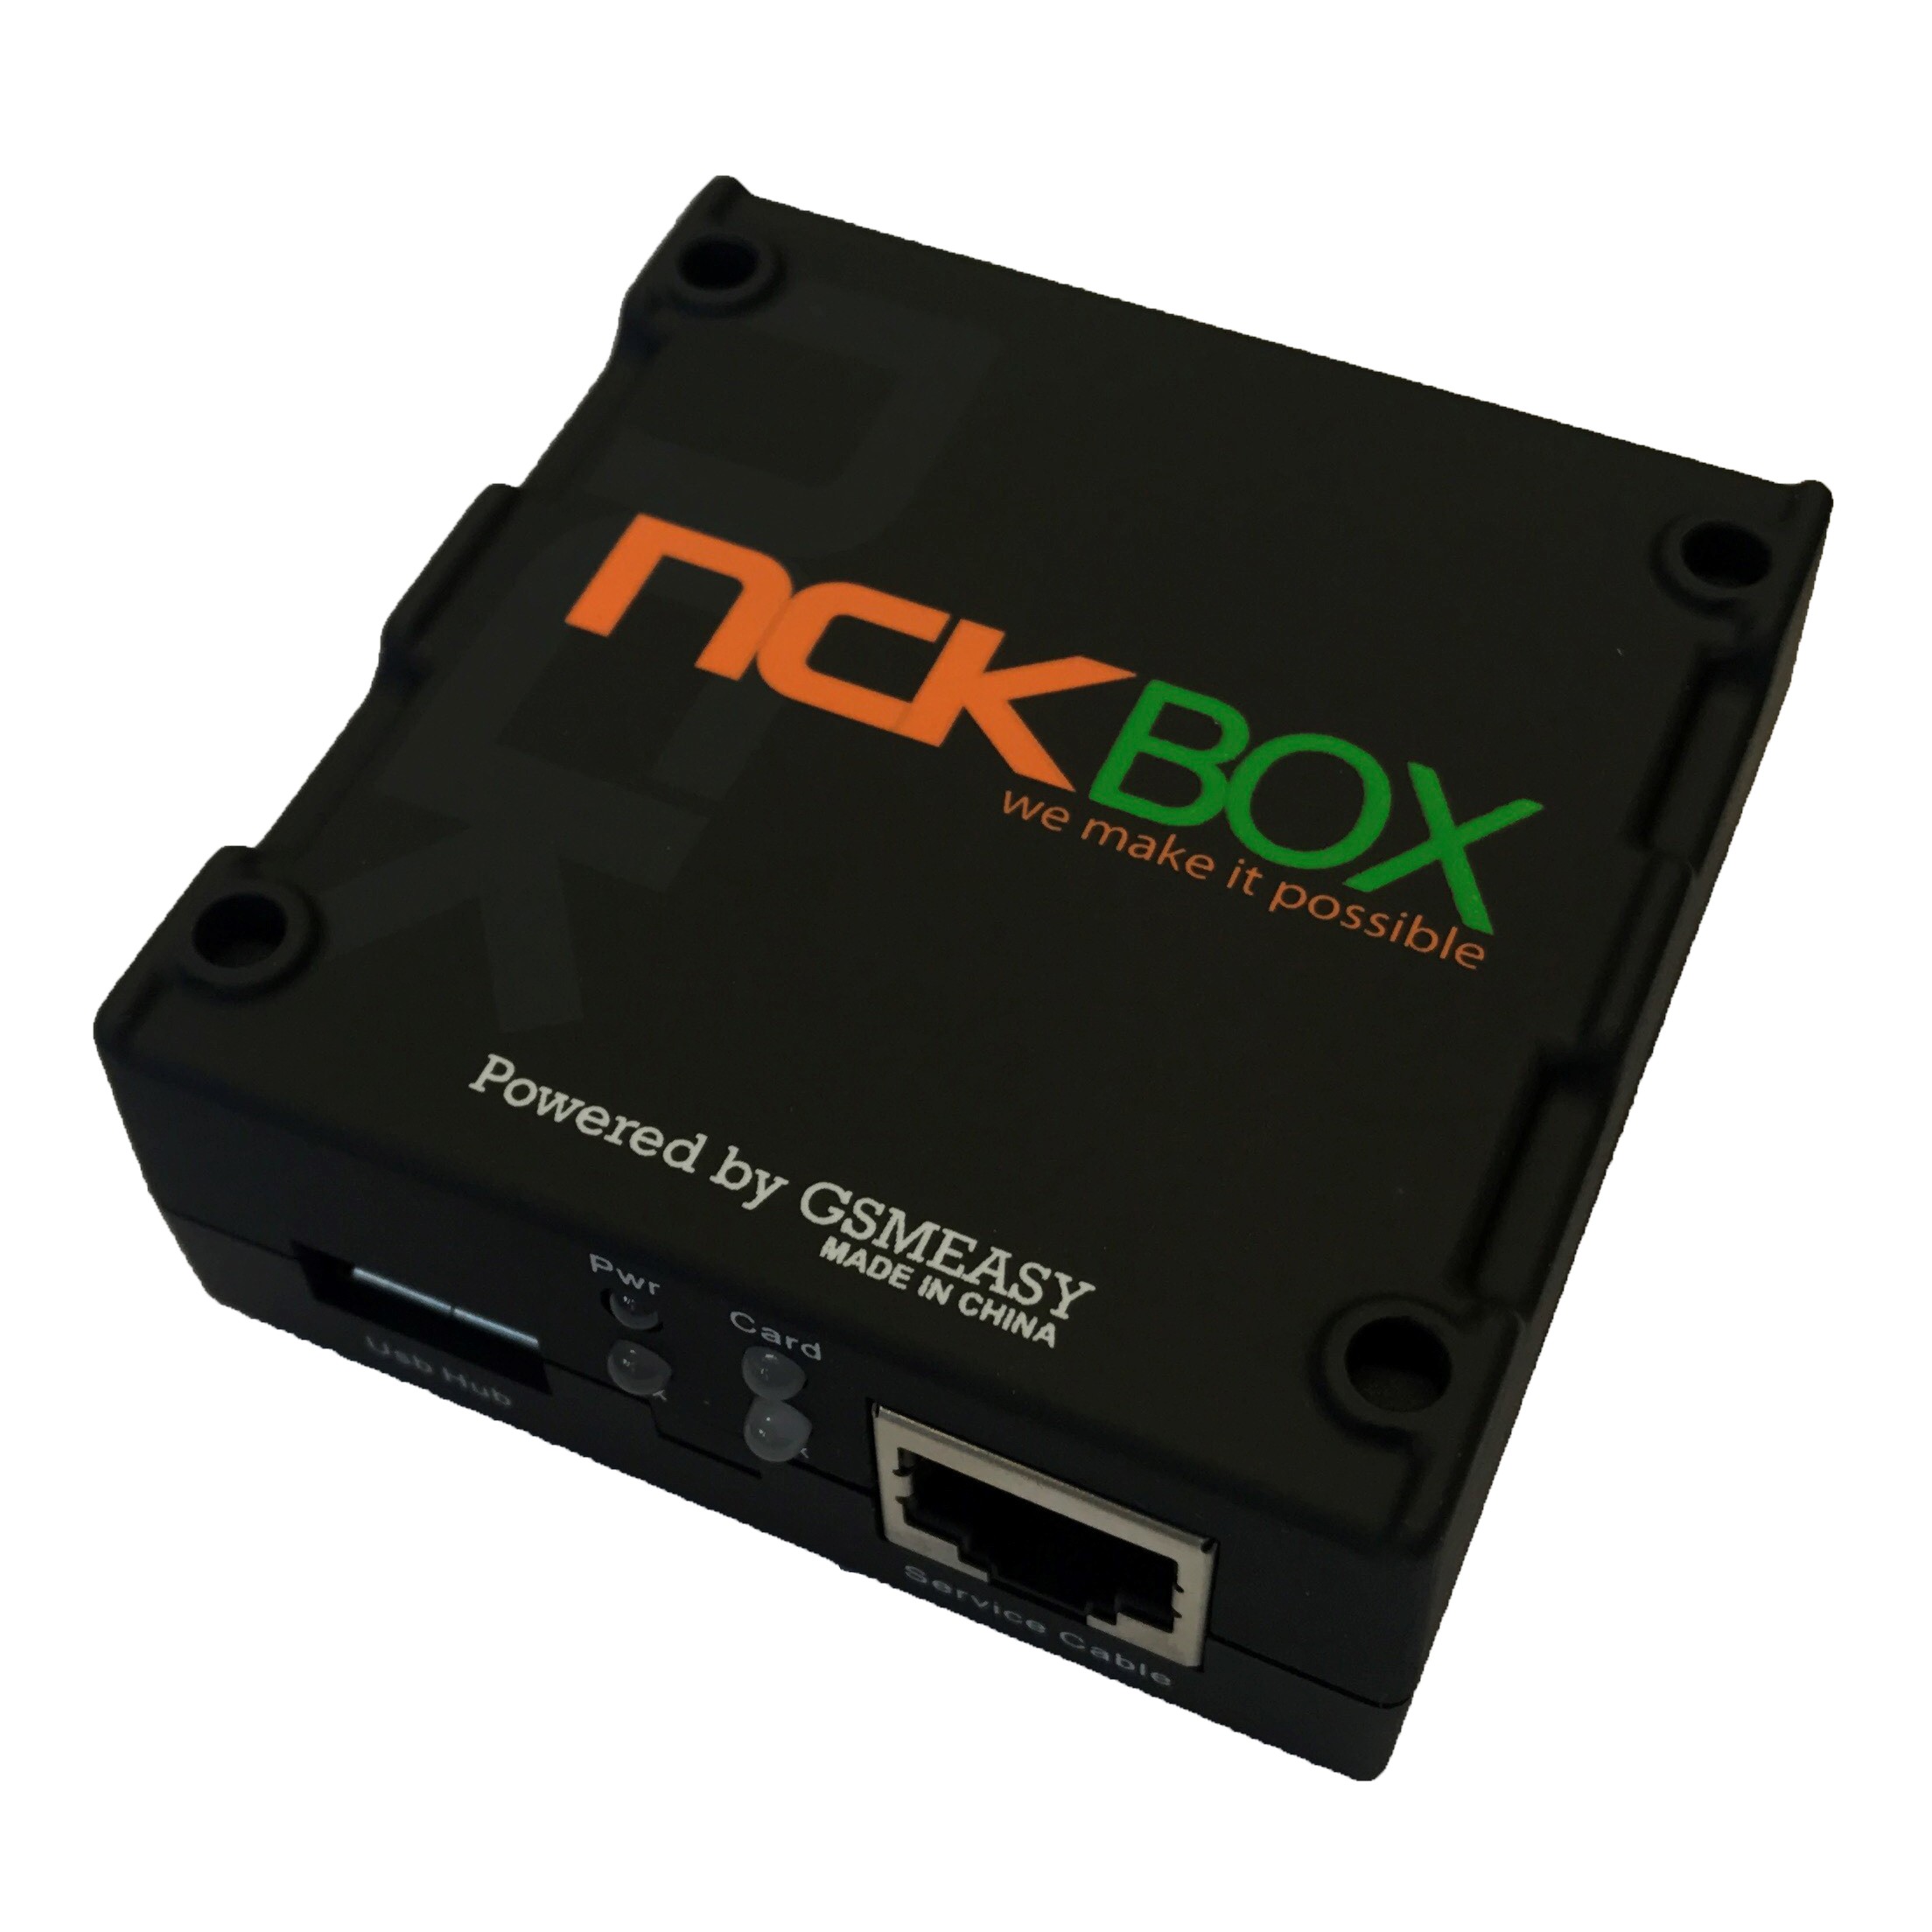 NCK Box / Pro SPRD Module v1.6